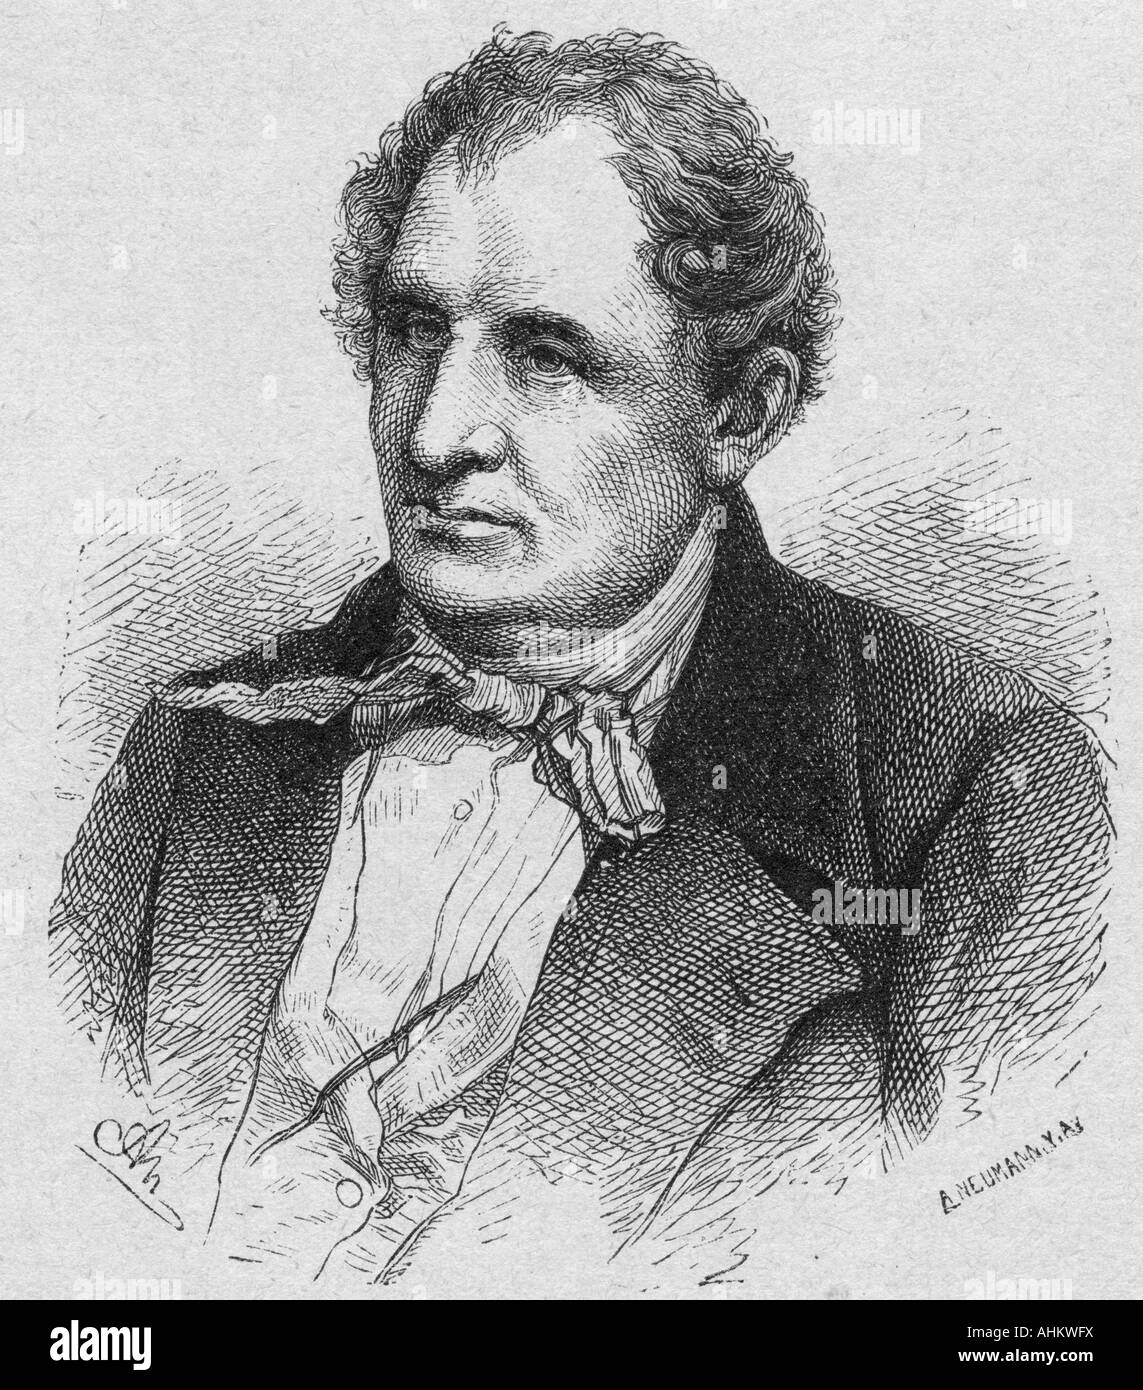 Cooper, James Fenimore, 15.9.1789  - 14.9.1851 american author, wood engraving Adolf Neumann (1825 - 1884), 19th century, literature, deerslayer, historic, portrait, , Stock Photo